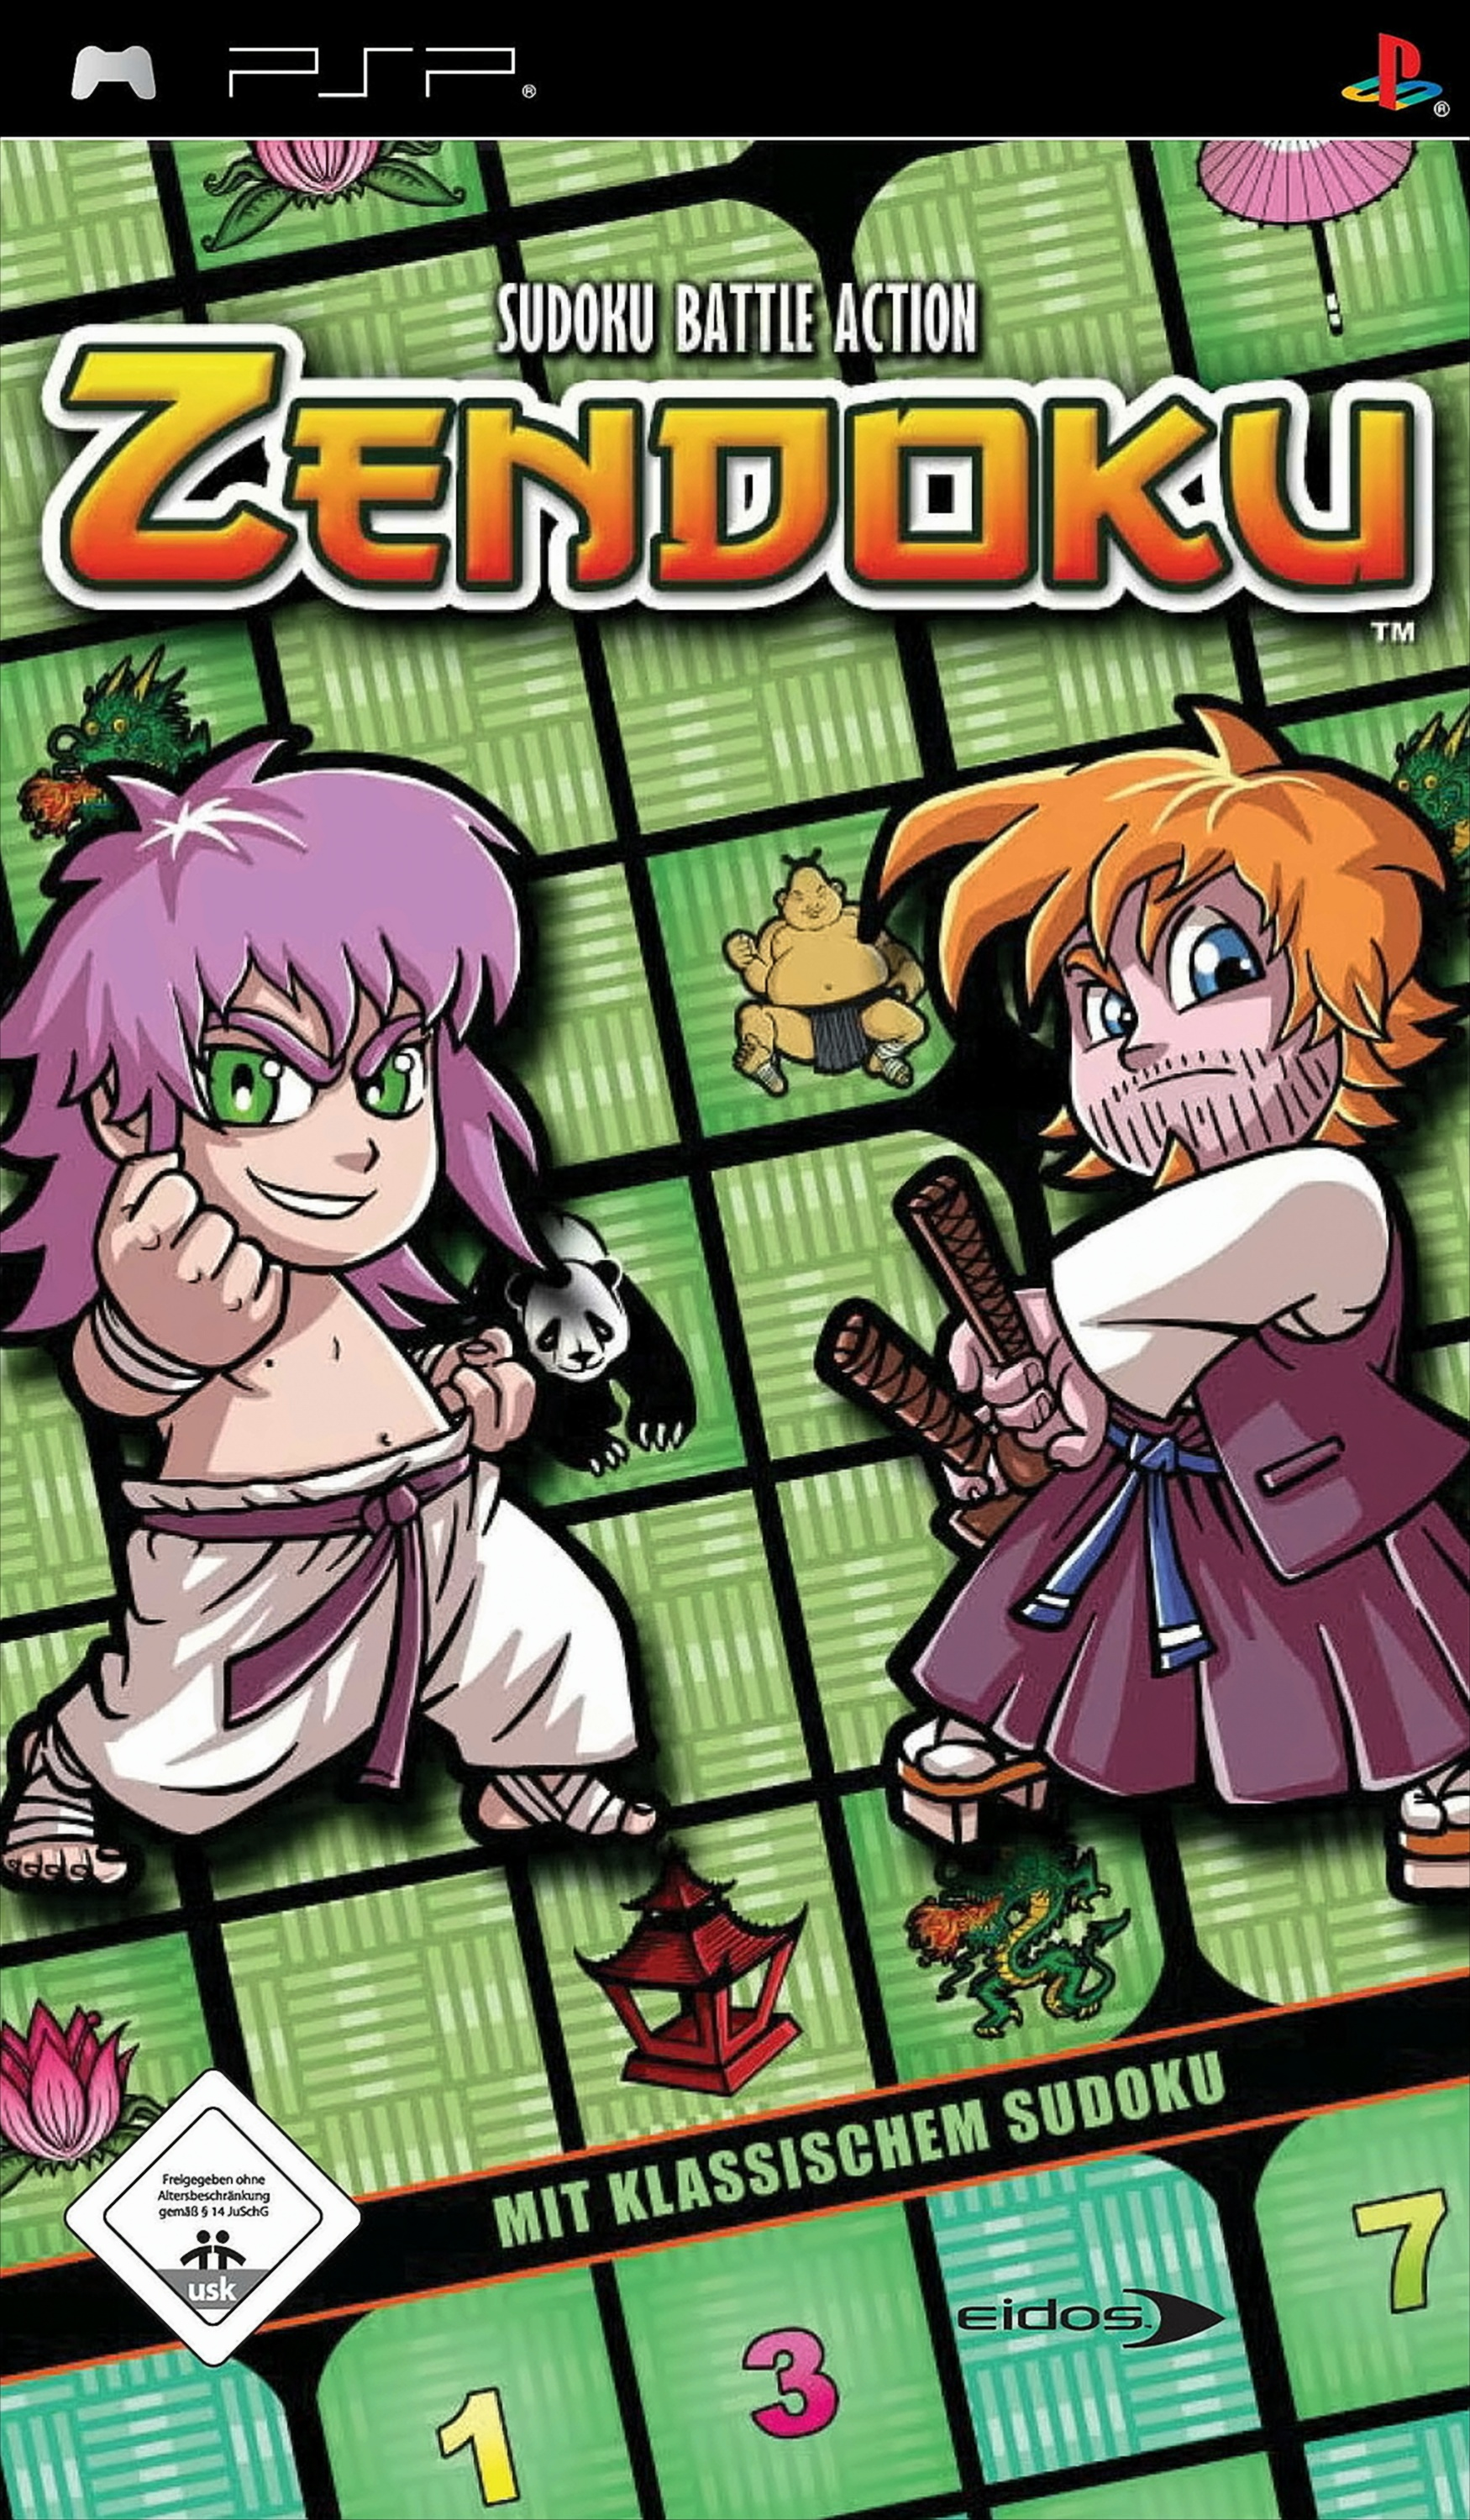 - Zendoku - [PSP] Action Sudoku Battle